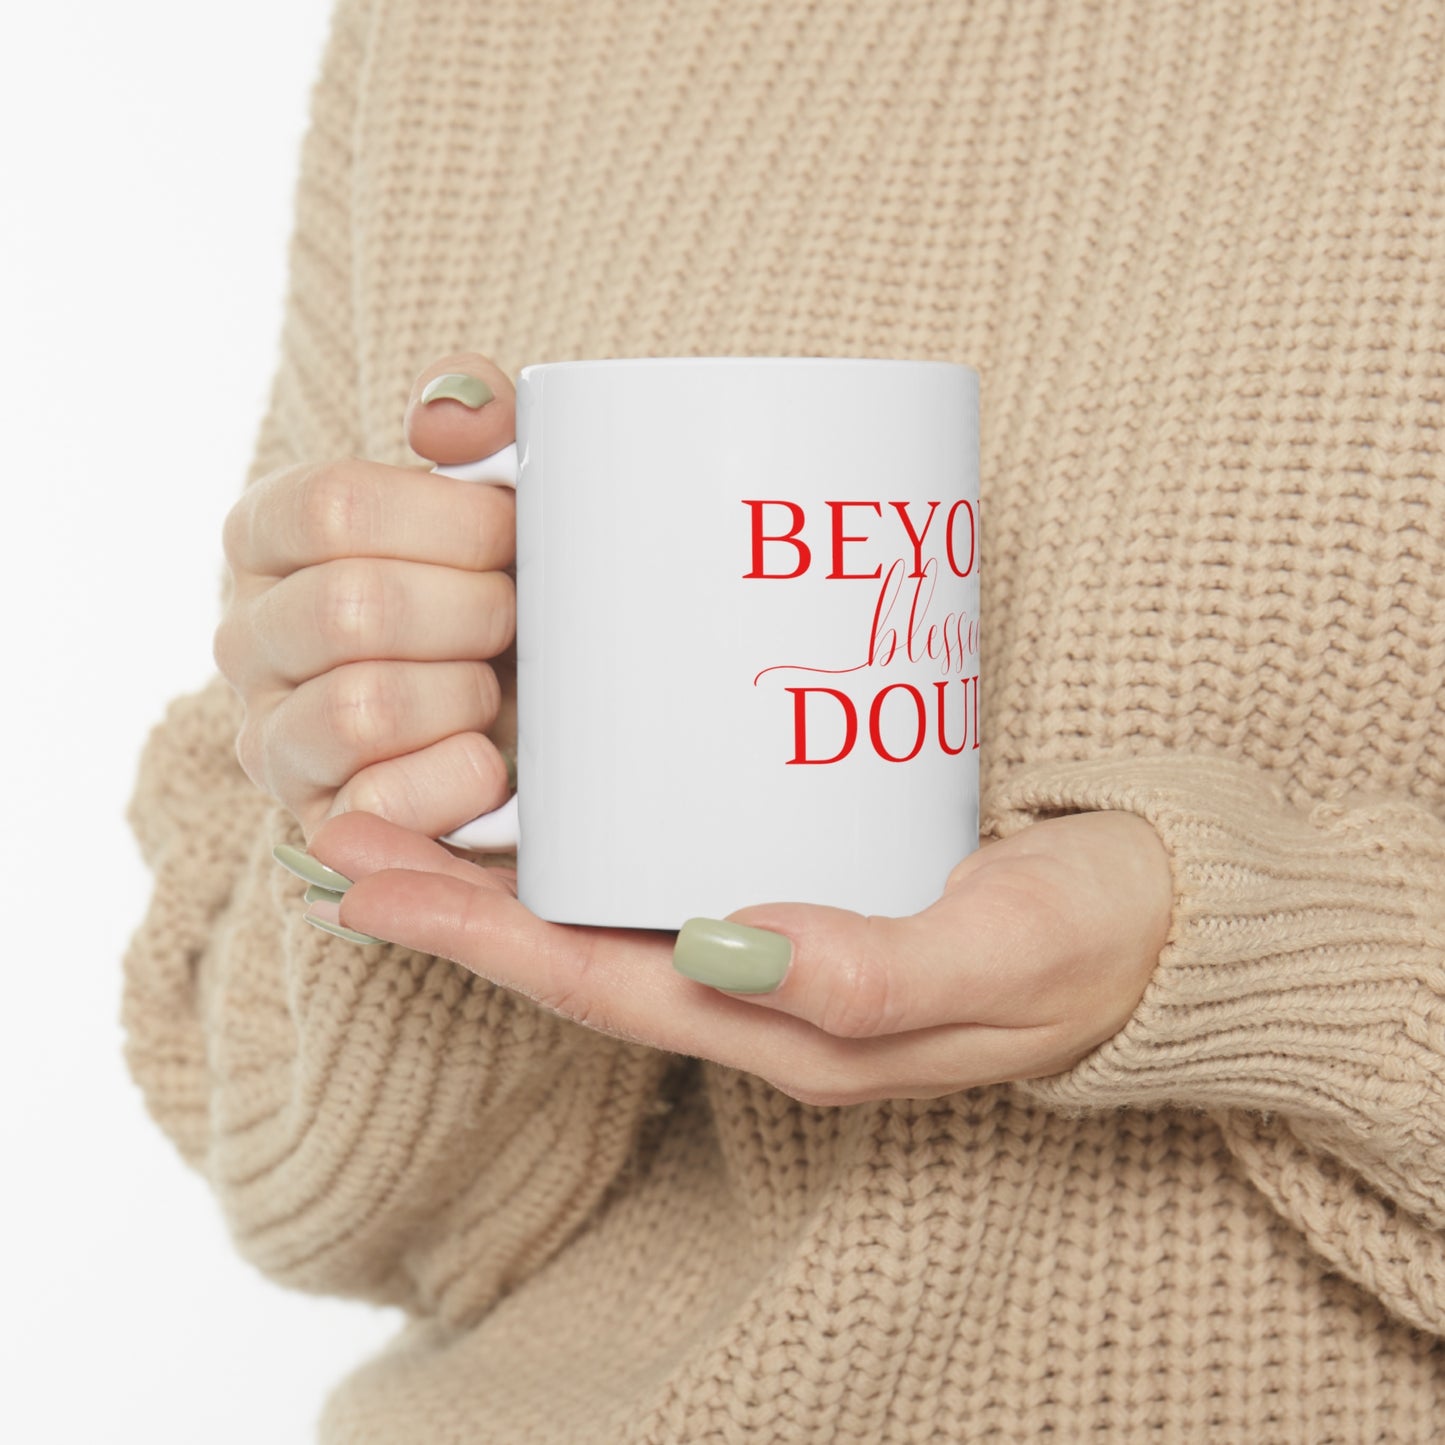 Beyond Blessed Doula - Plain Ceramic Mug 11oz - Red